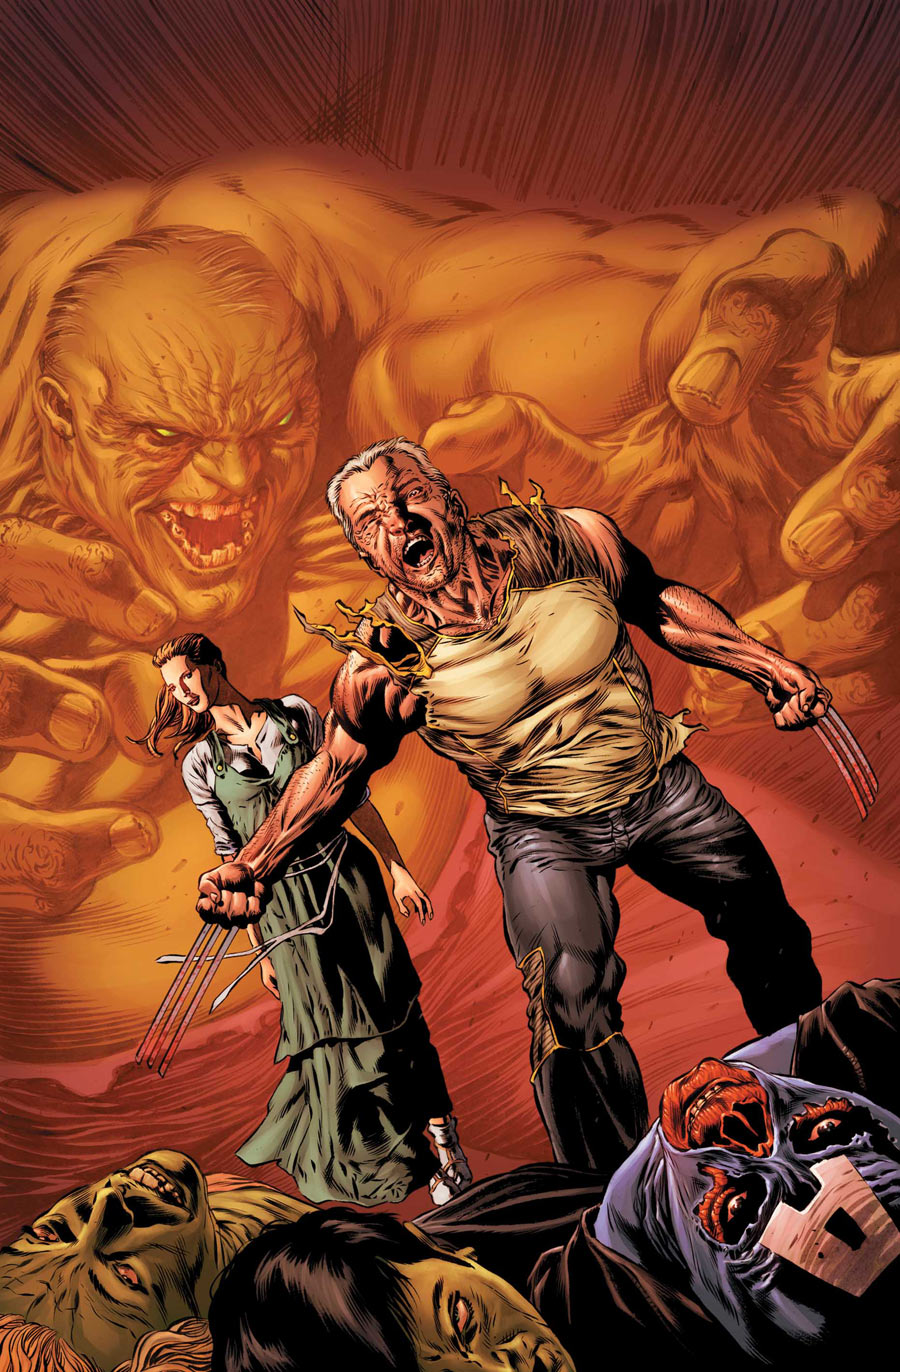 Savage Wolverine #7